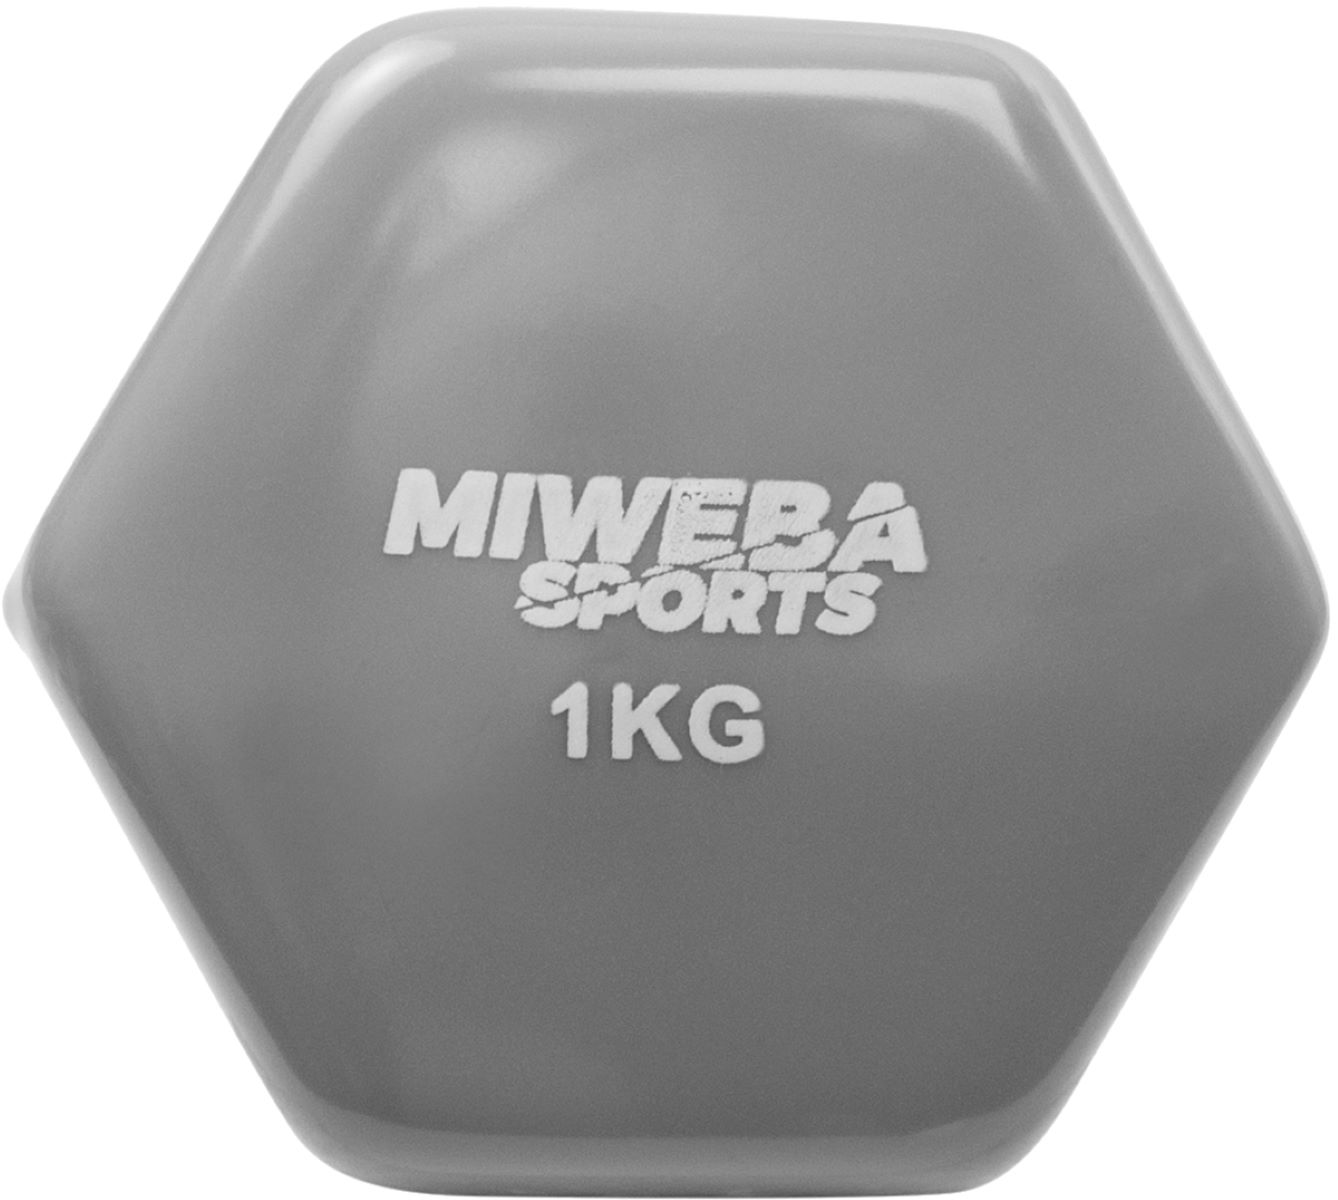 MIWEBA SPORTS NKH110 Kurzhantel, grau Vinyl-Hanteln Set